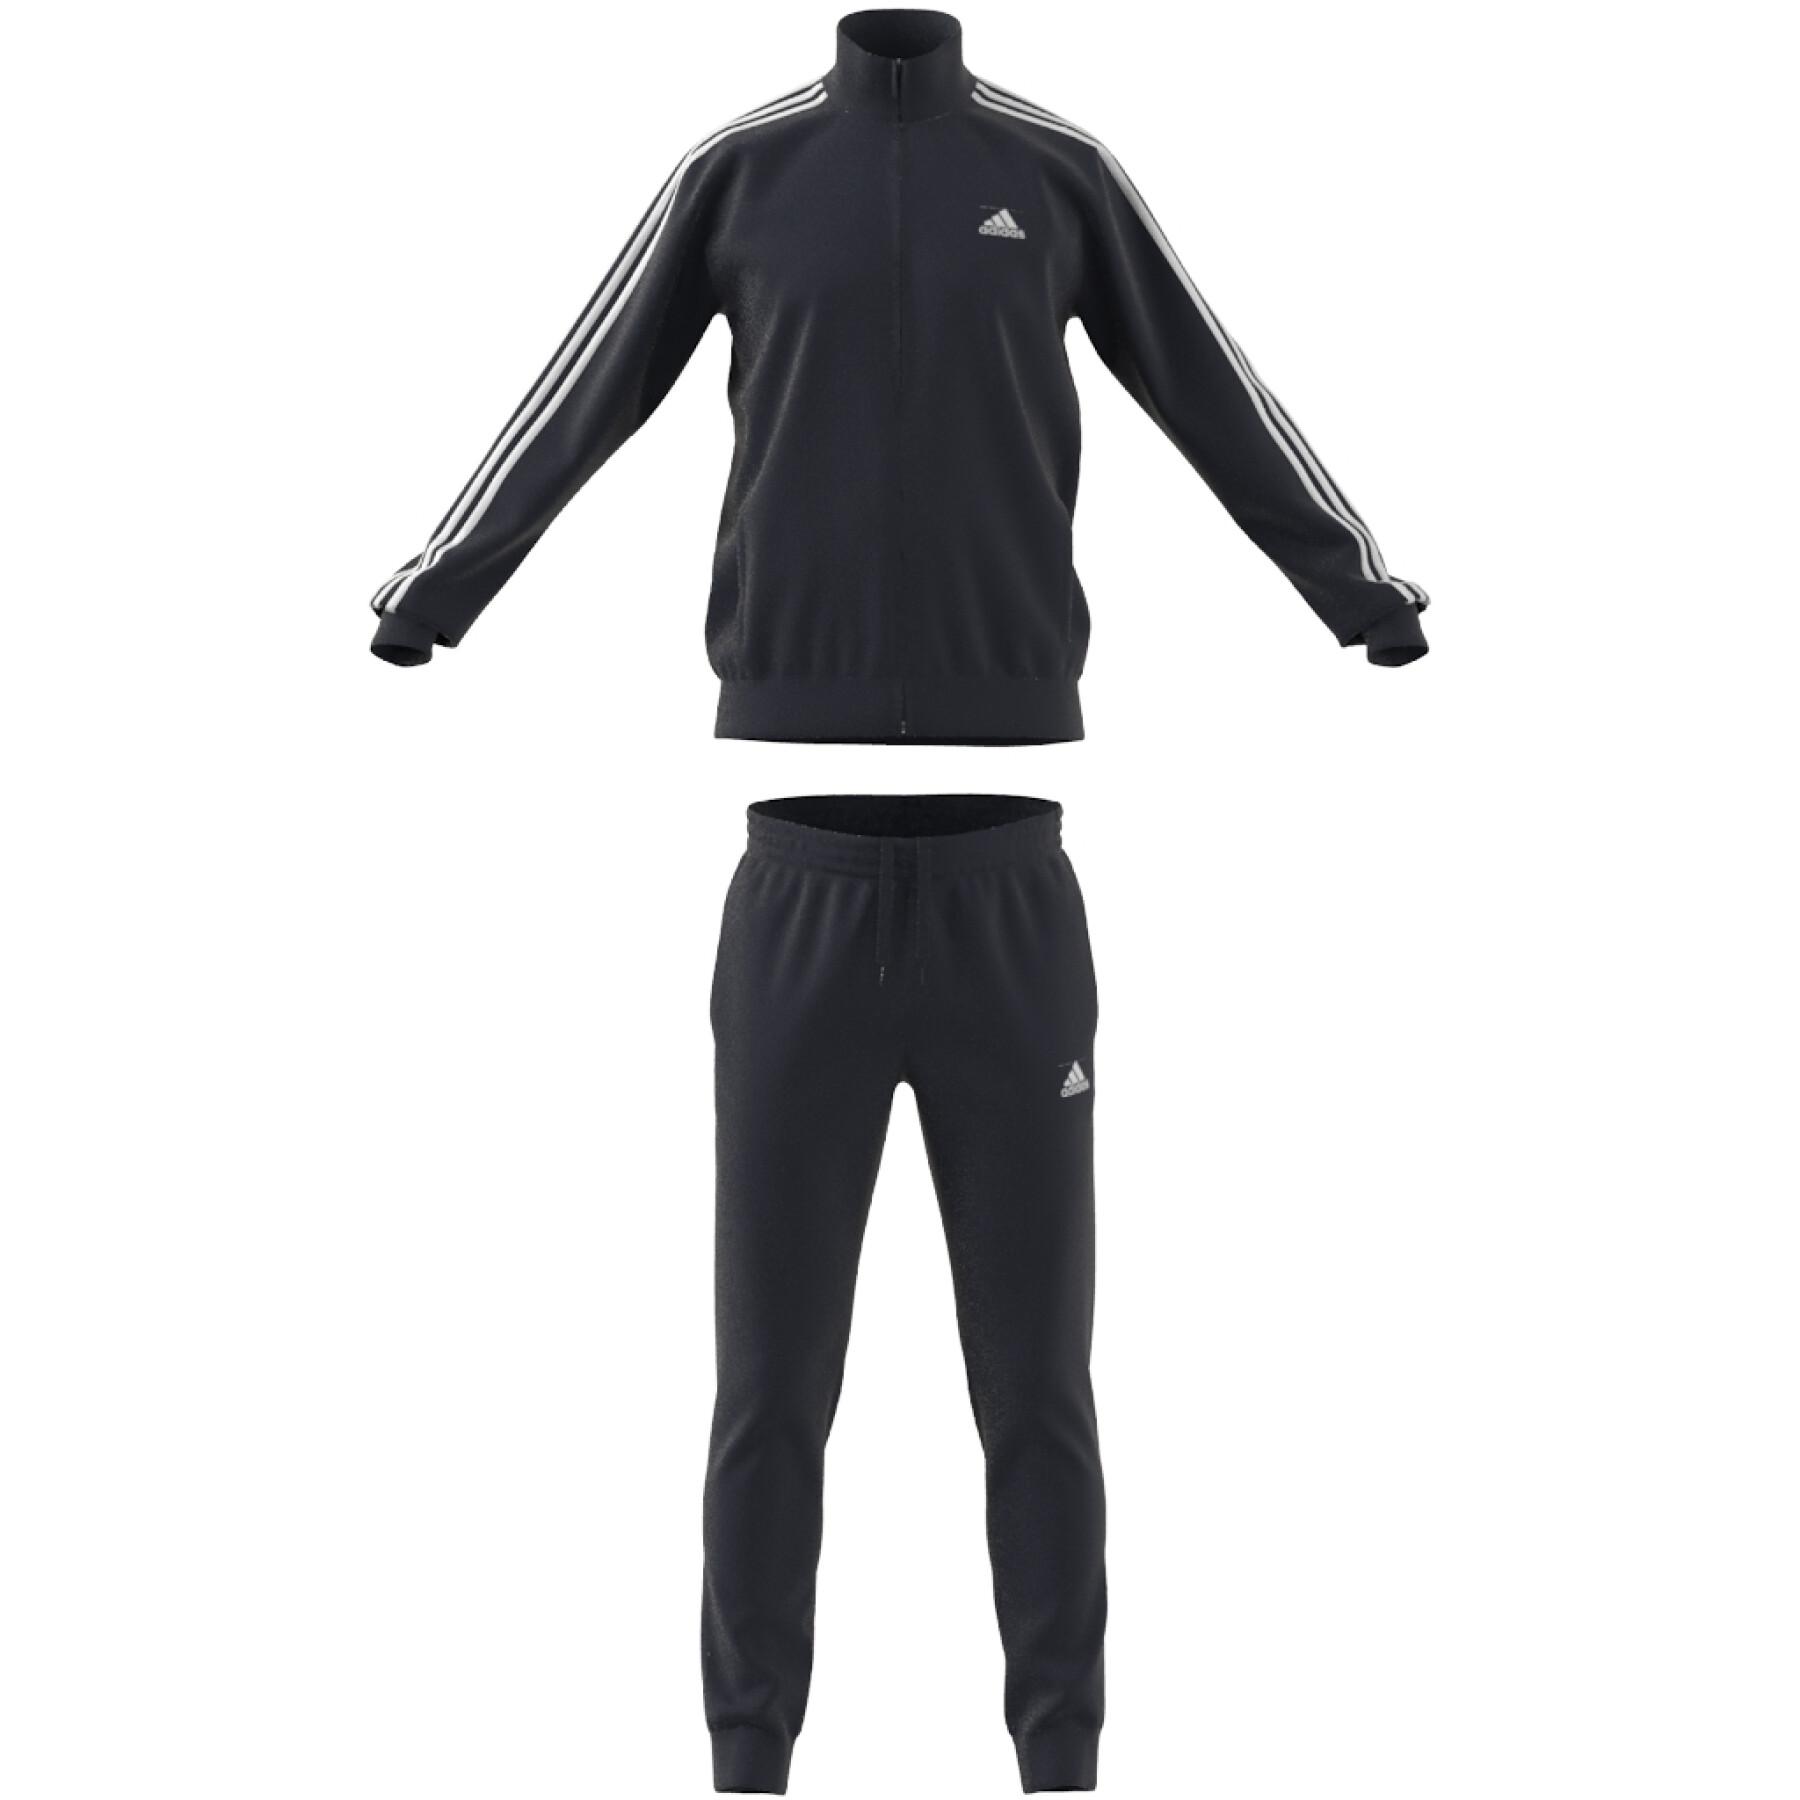 Fleece sweat suit adidas 3-Stripes